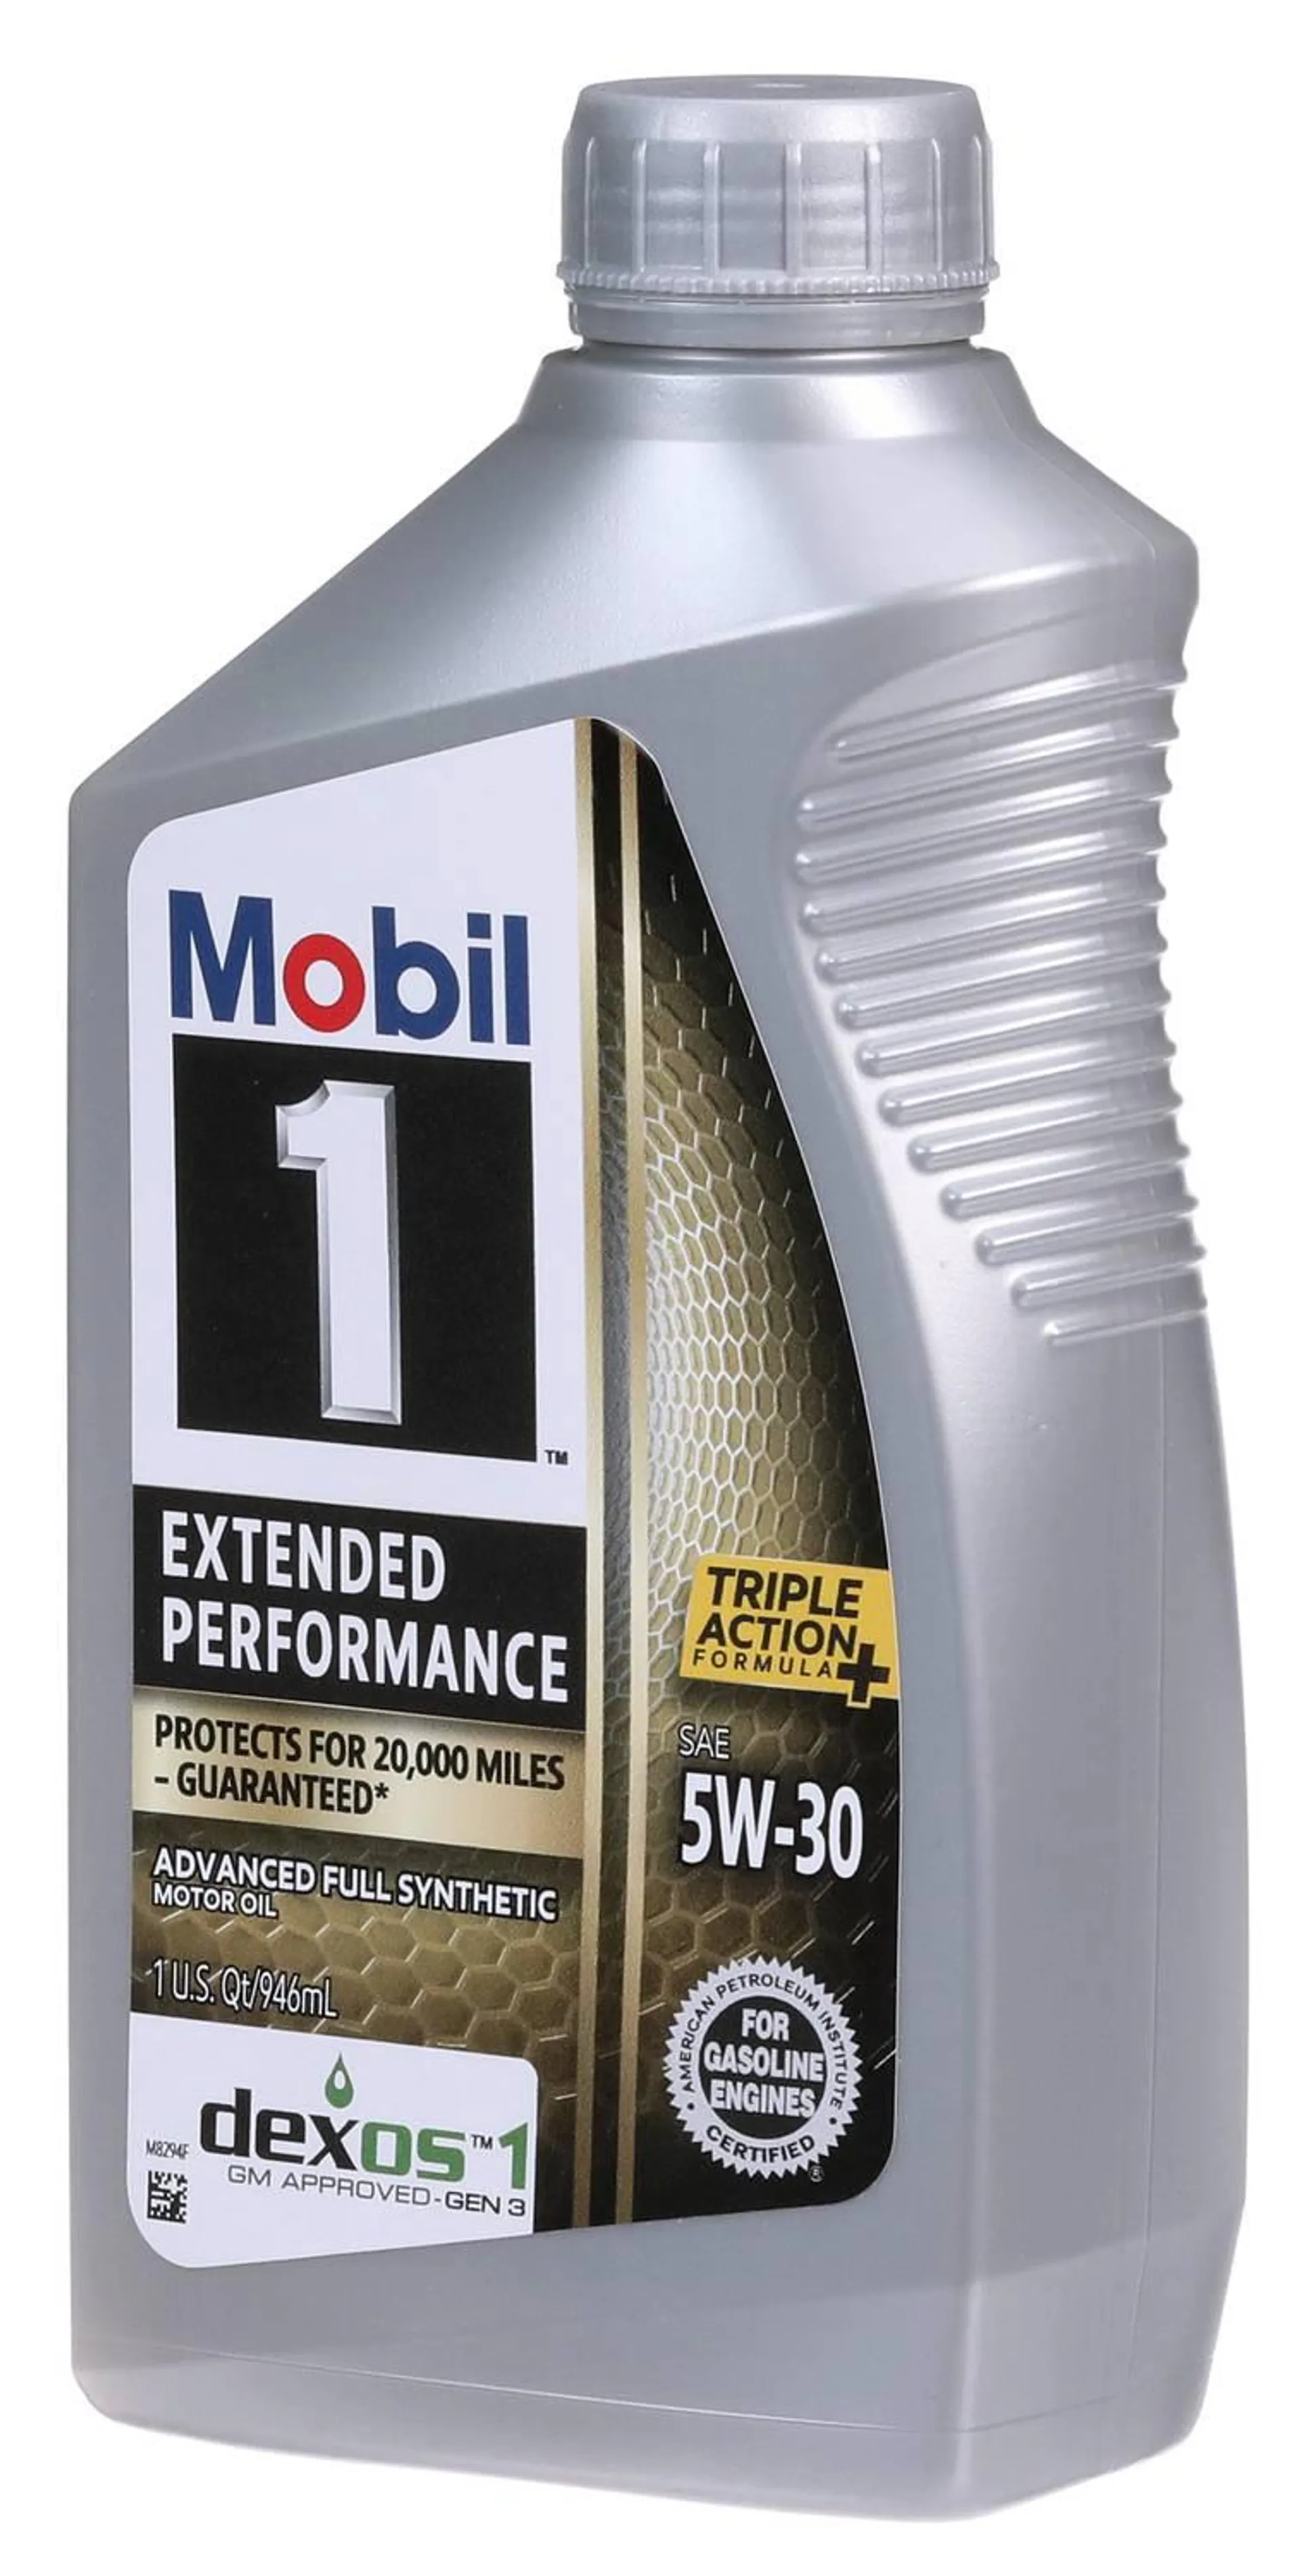 Mobil 1 Extended Performance Full Synthetic Full Synthetic Motor Oil 5W-30 1 Quart - 1-5-30EP